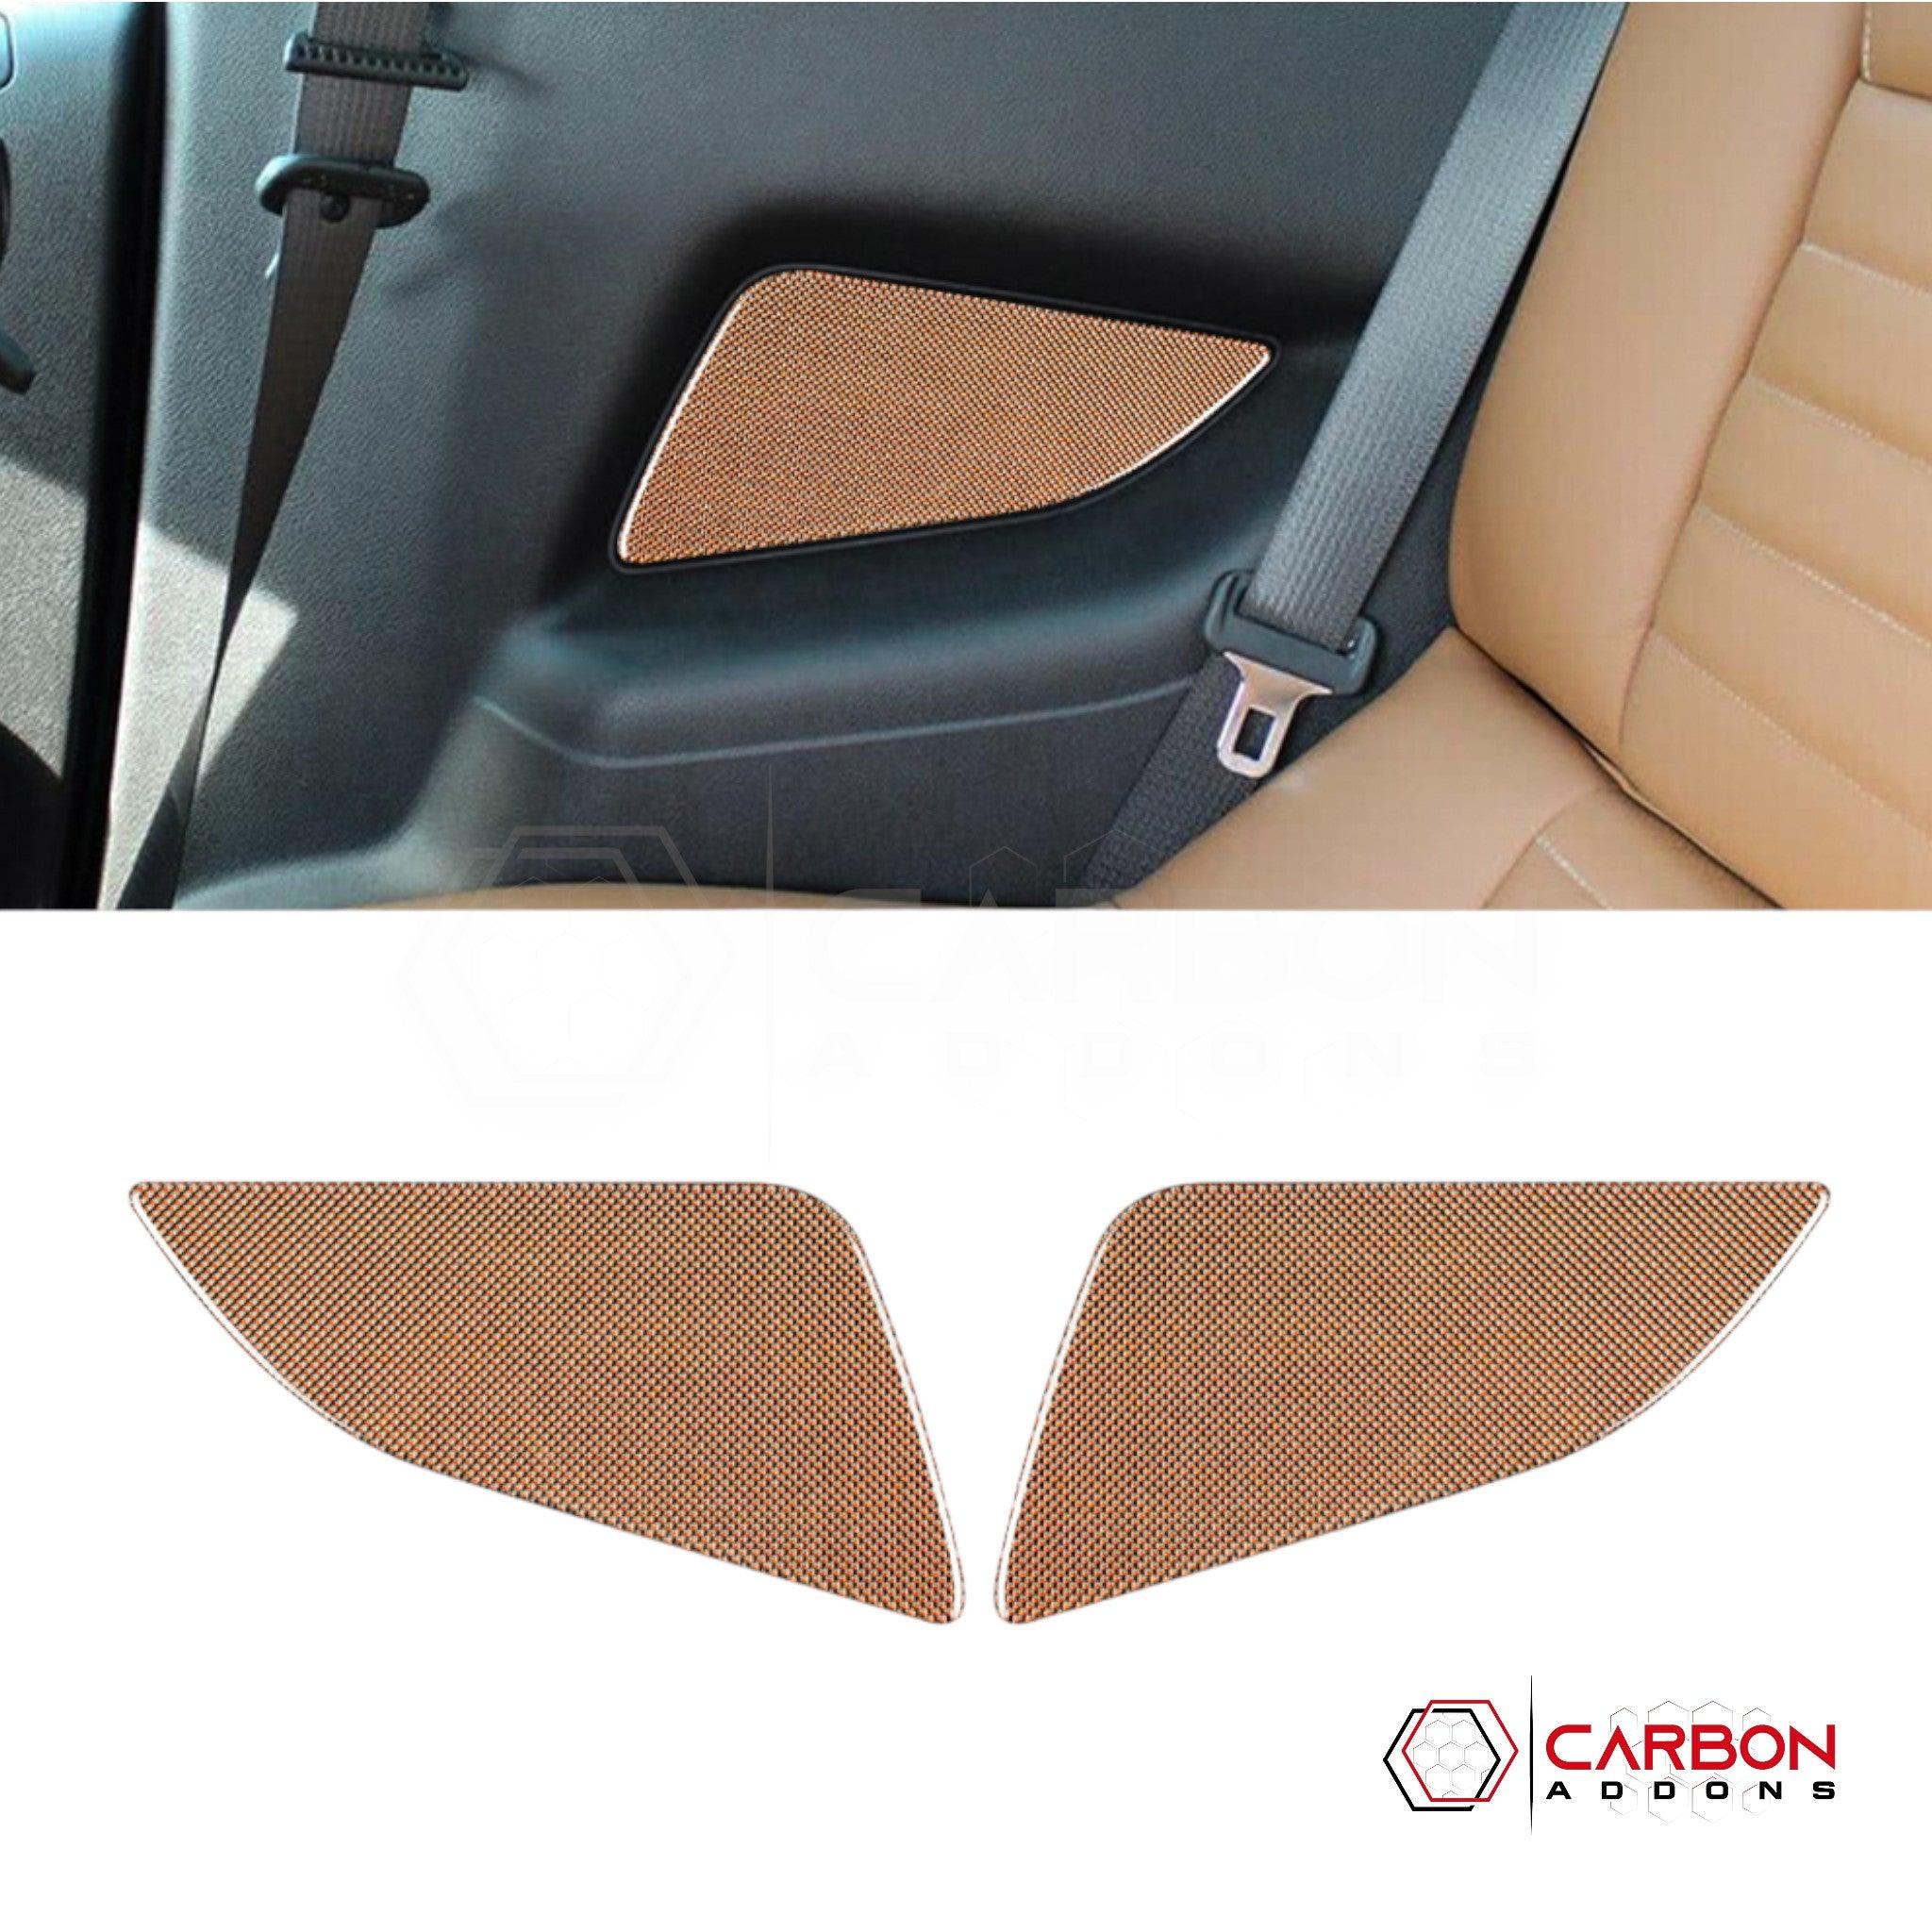 Mustang 2010-2014 Reflective Carbon Fiber Rear Seat Arm Rest Trim Overlay - carbonaddons Carbon Fiber Parts, Accessories, Upgrades, Mods